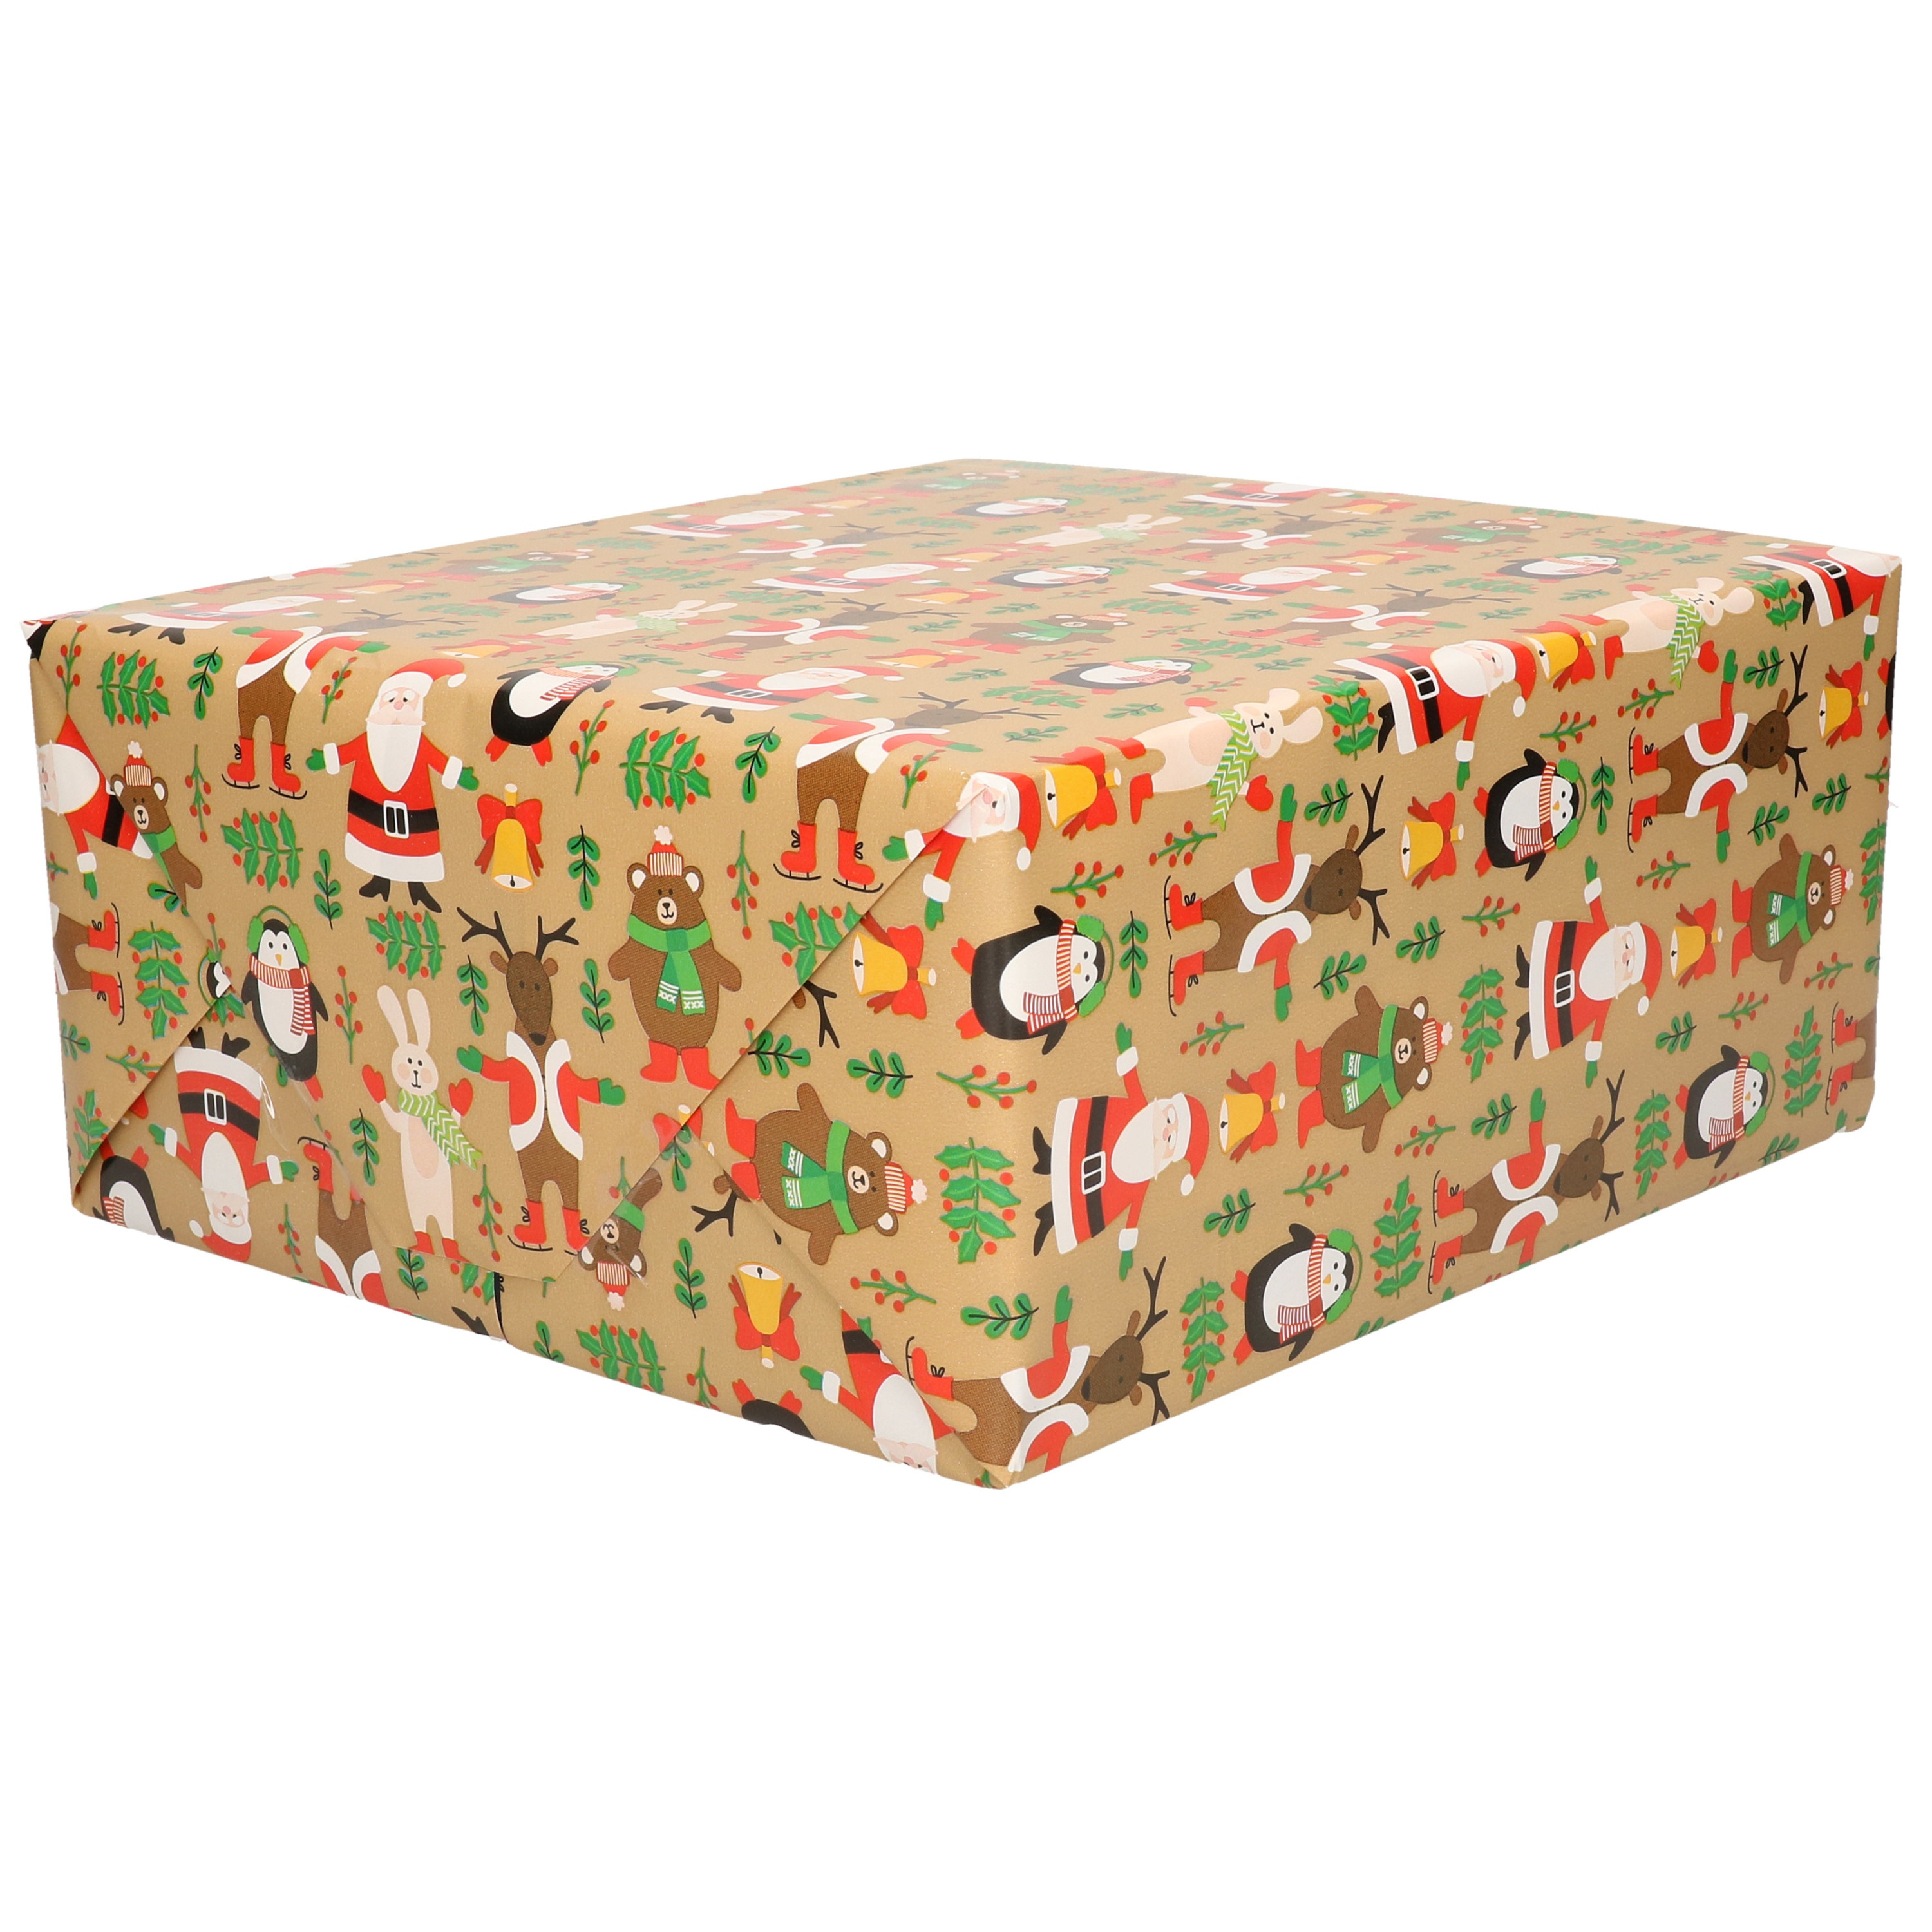 3x Rollen Kerst inpakpapier/cadeaupapier bruin 2,5 x 0,7 meter